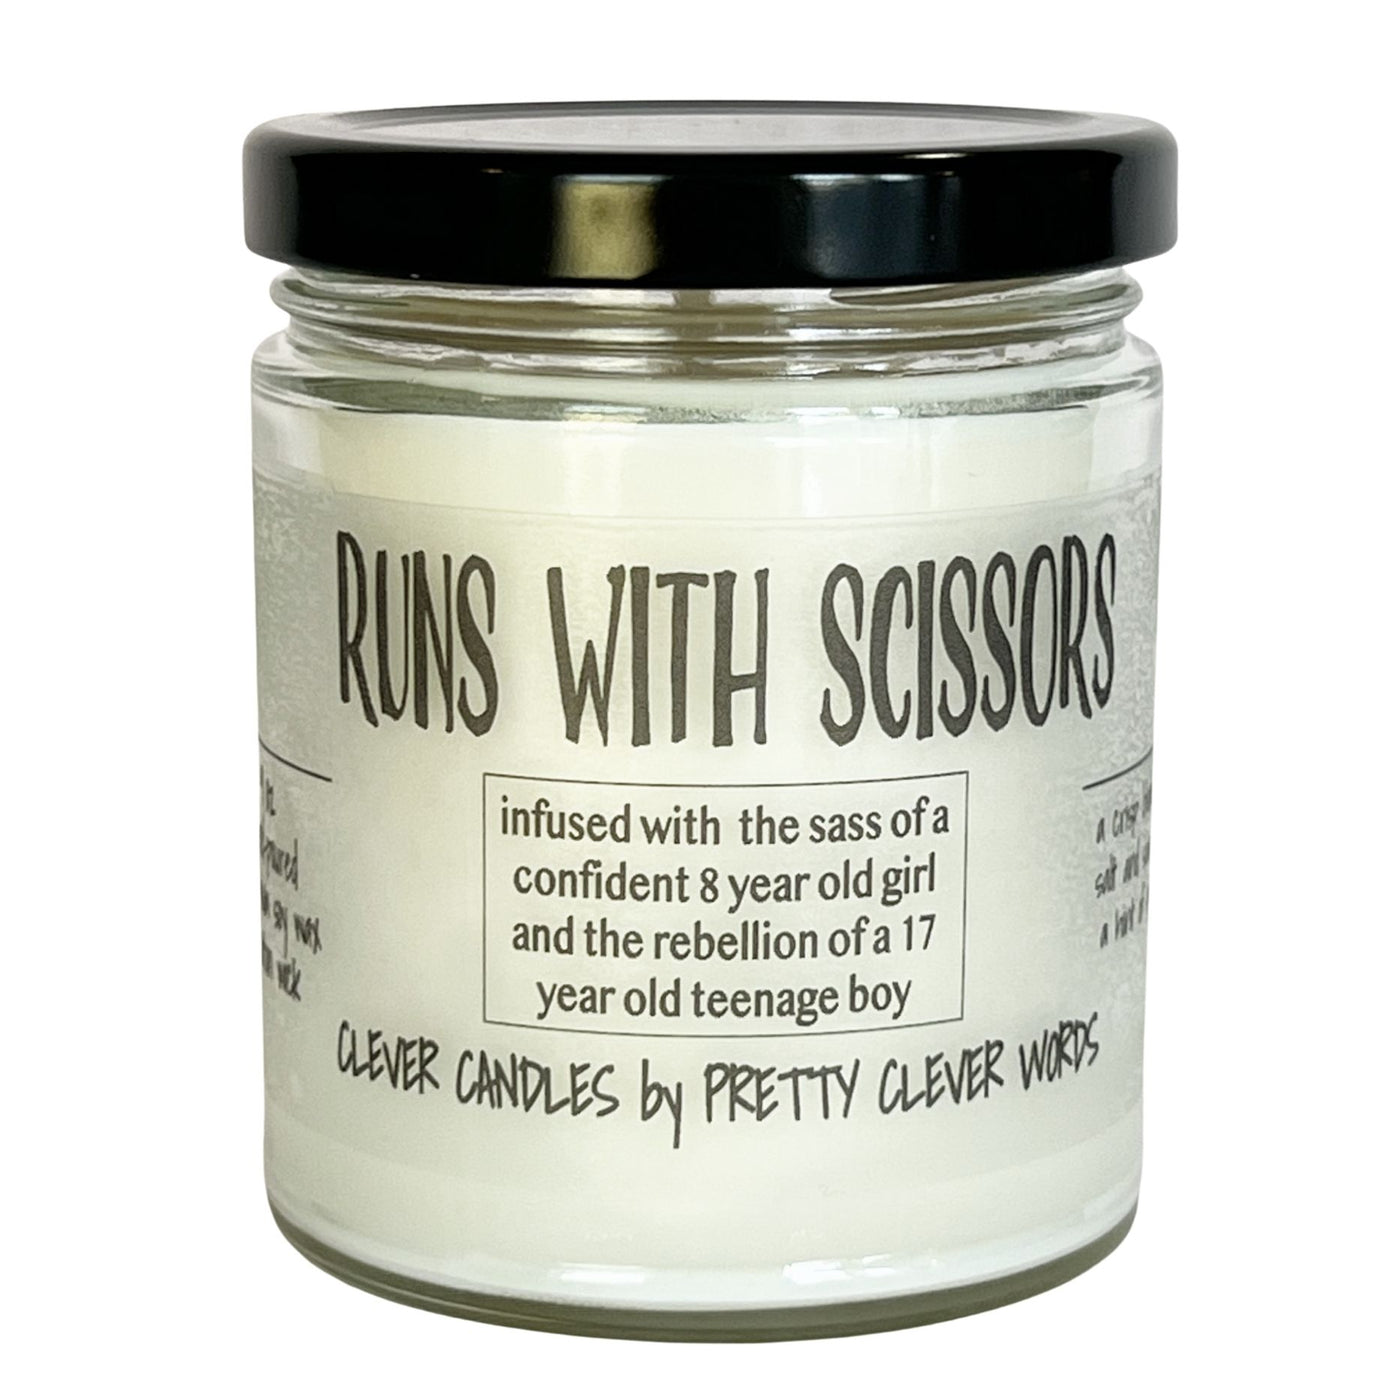 runs with scissors - salt life candle